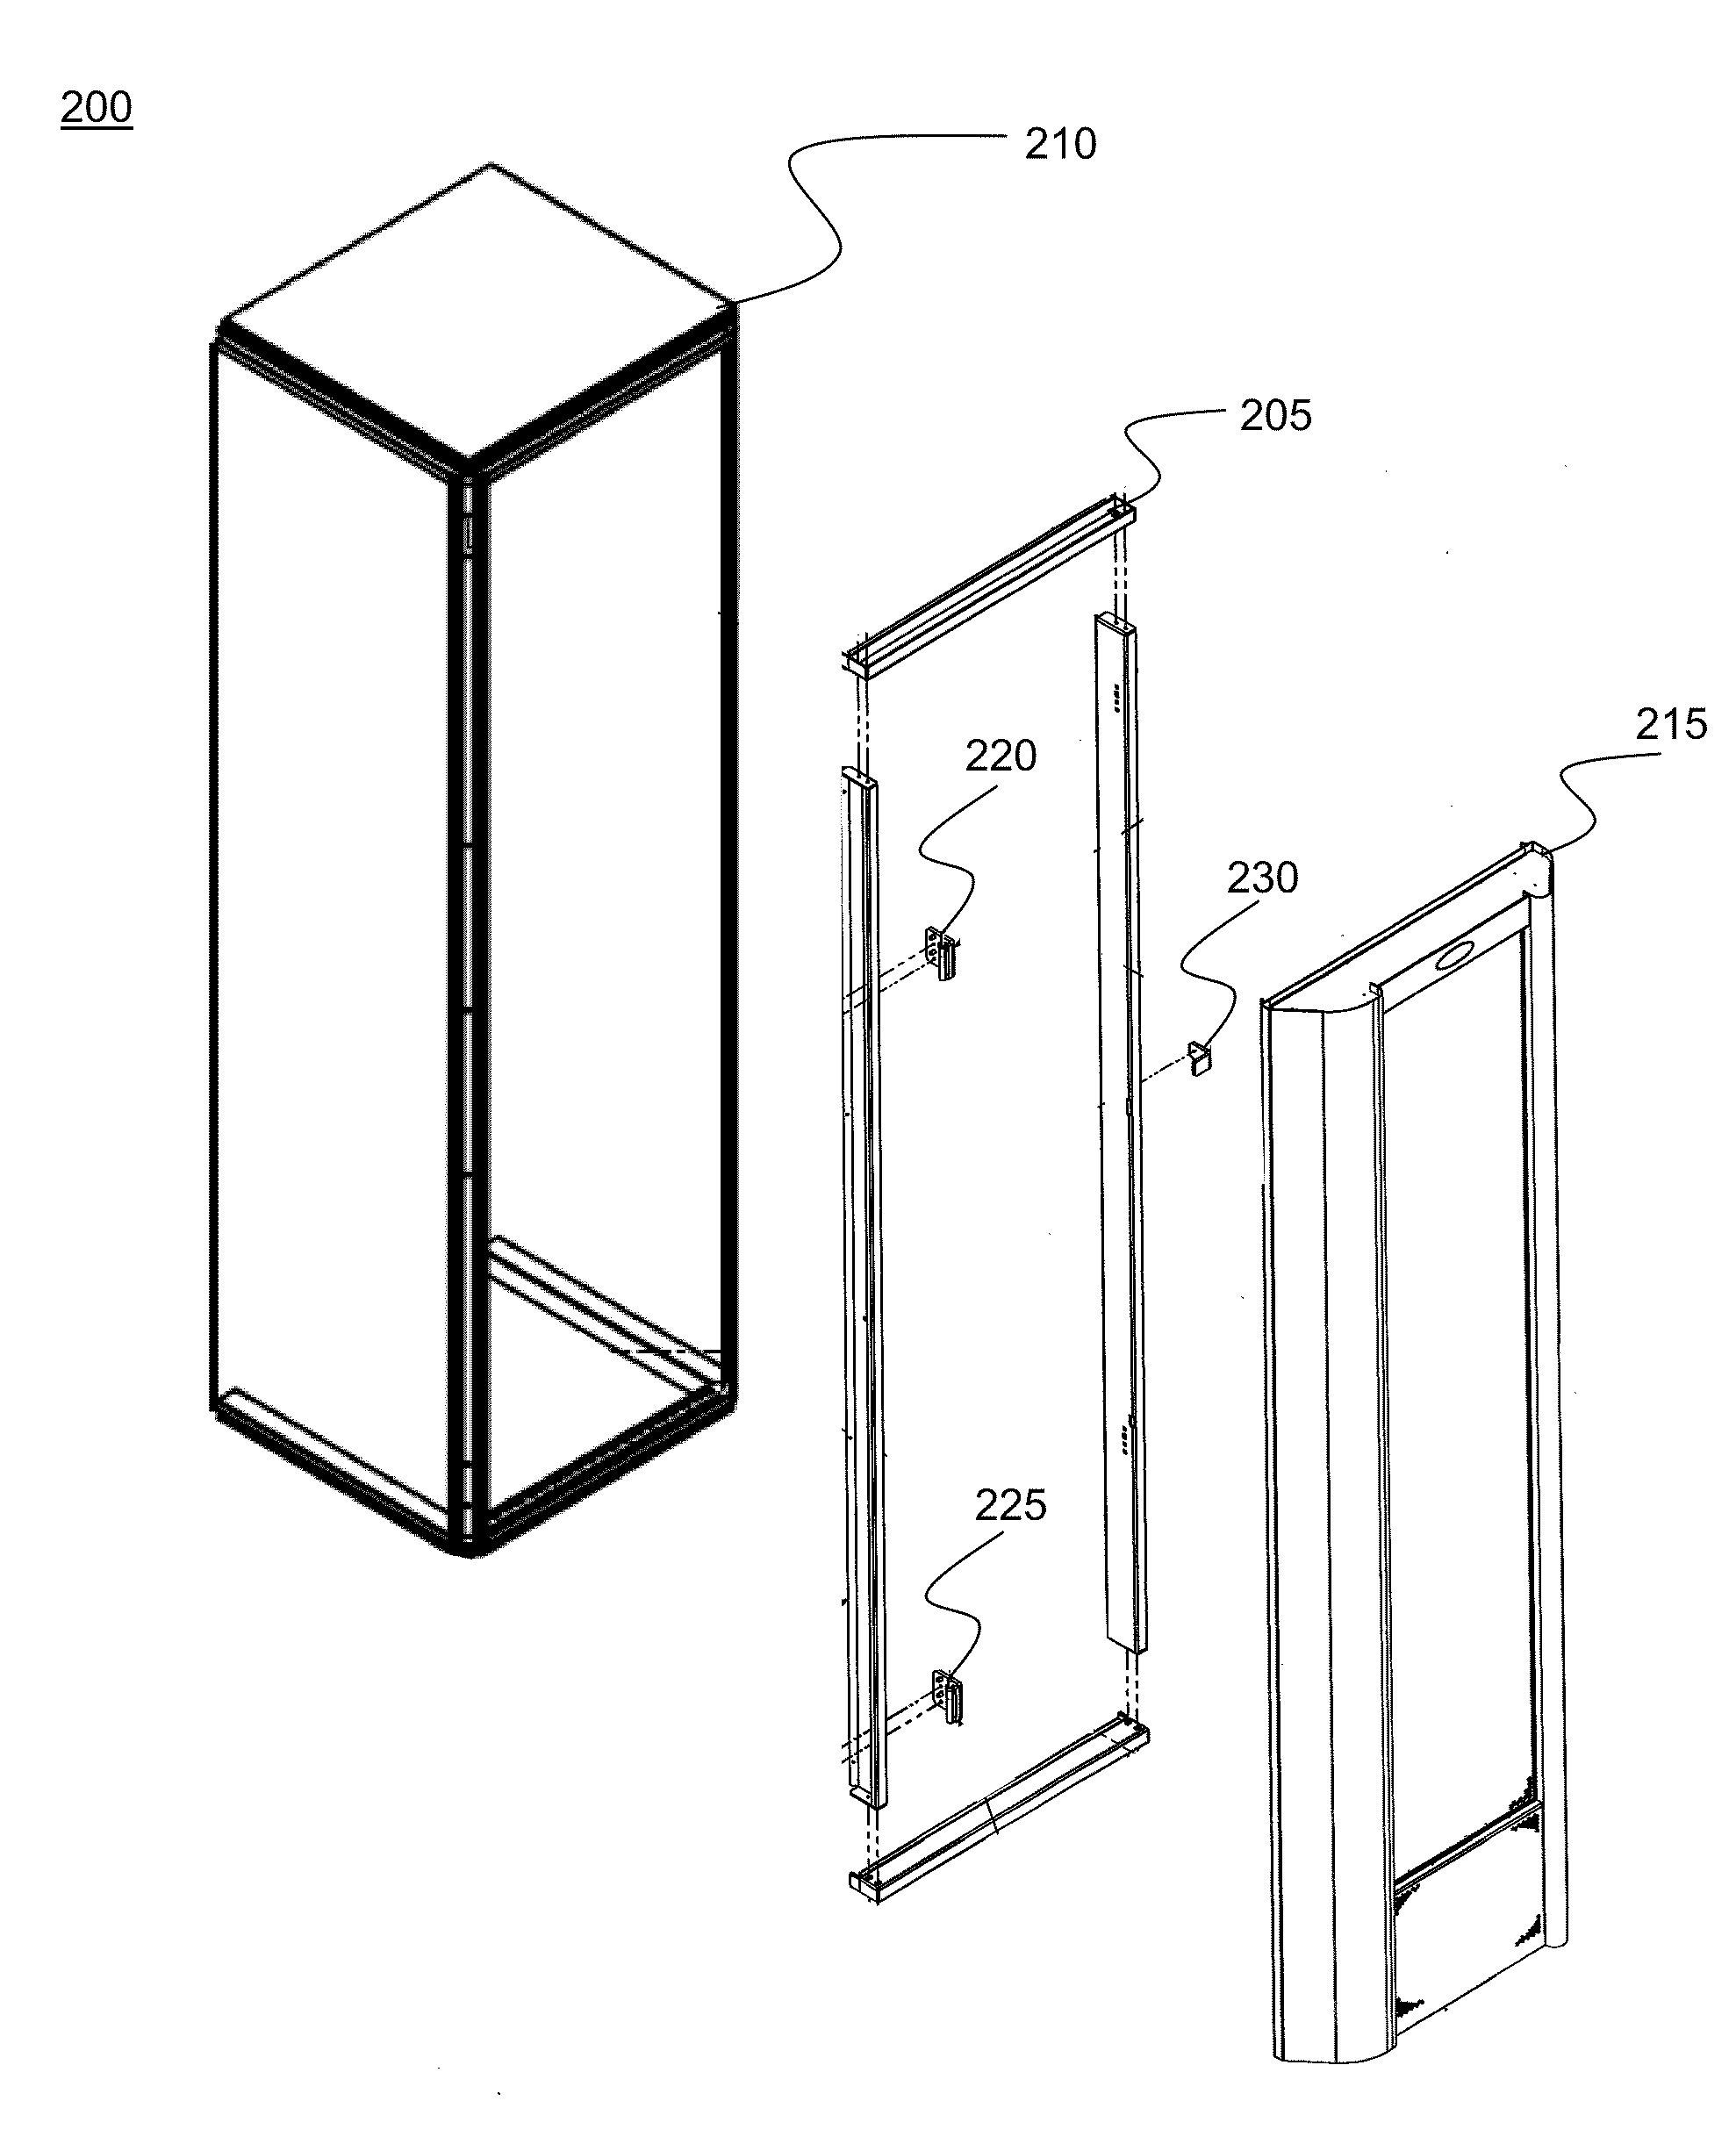 Rear door heat exchanger transition frame